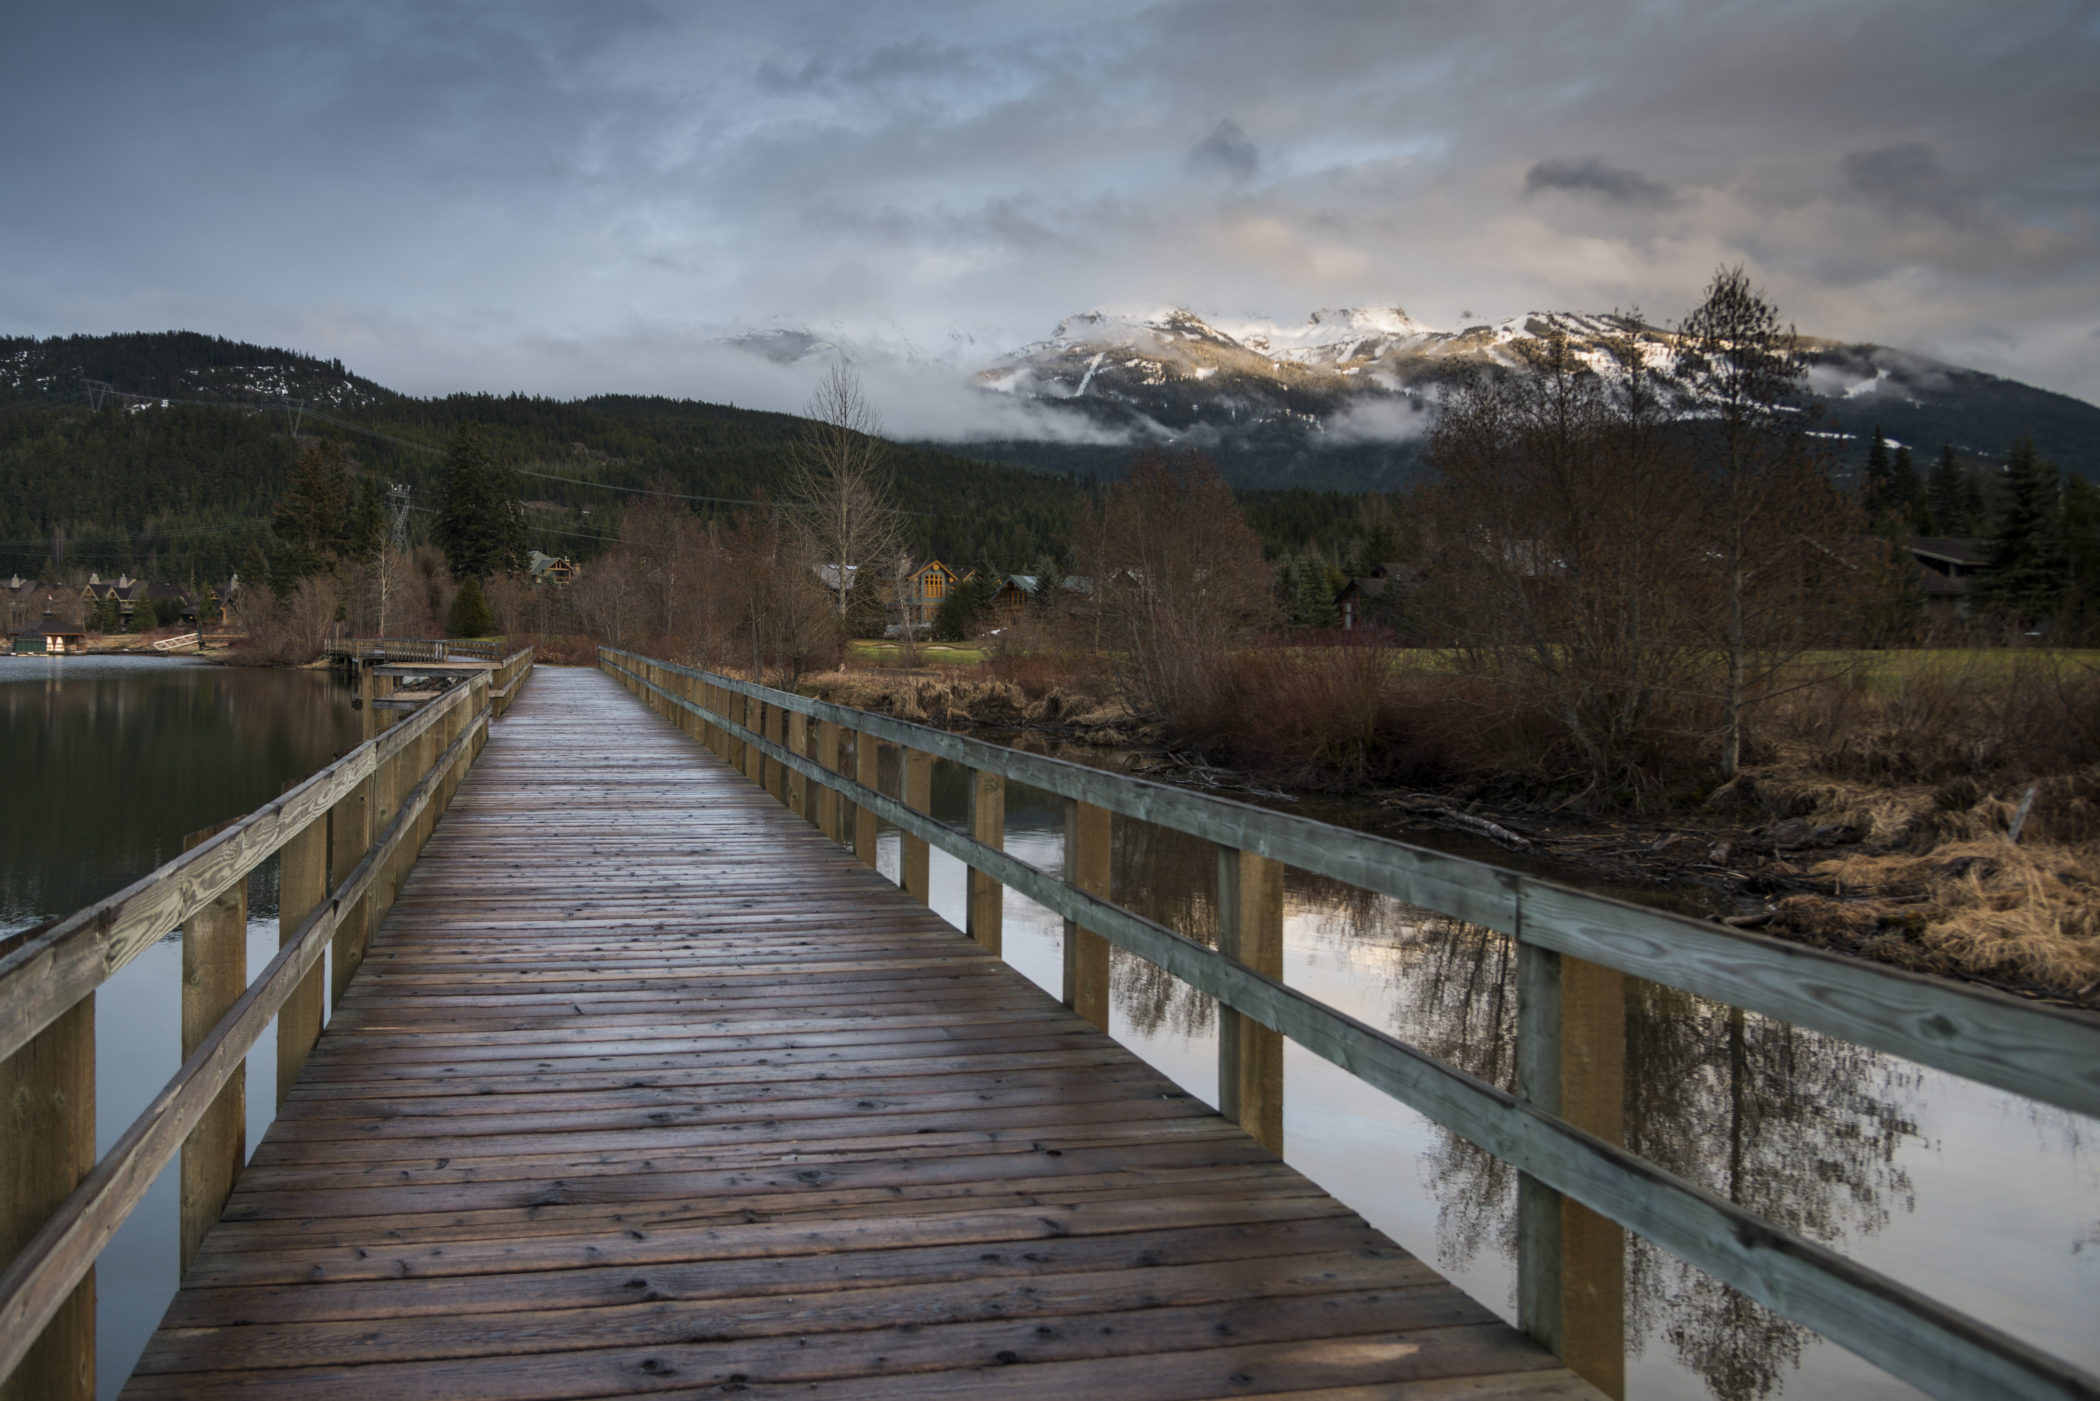 Wooden footbridge over river, Whistler, British Columbia, Canada